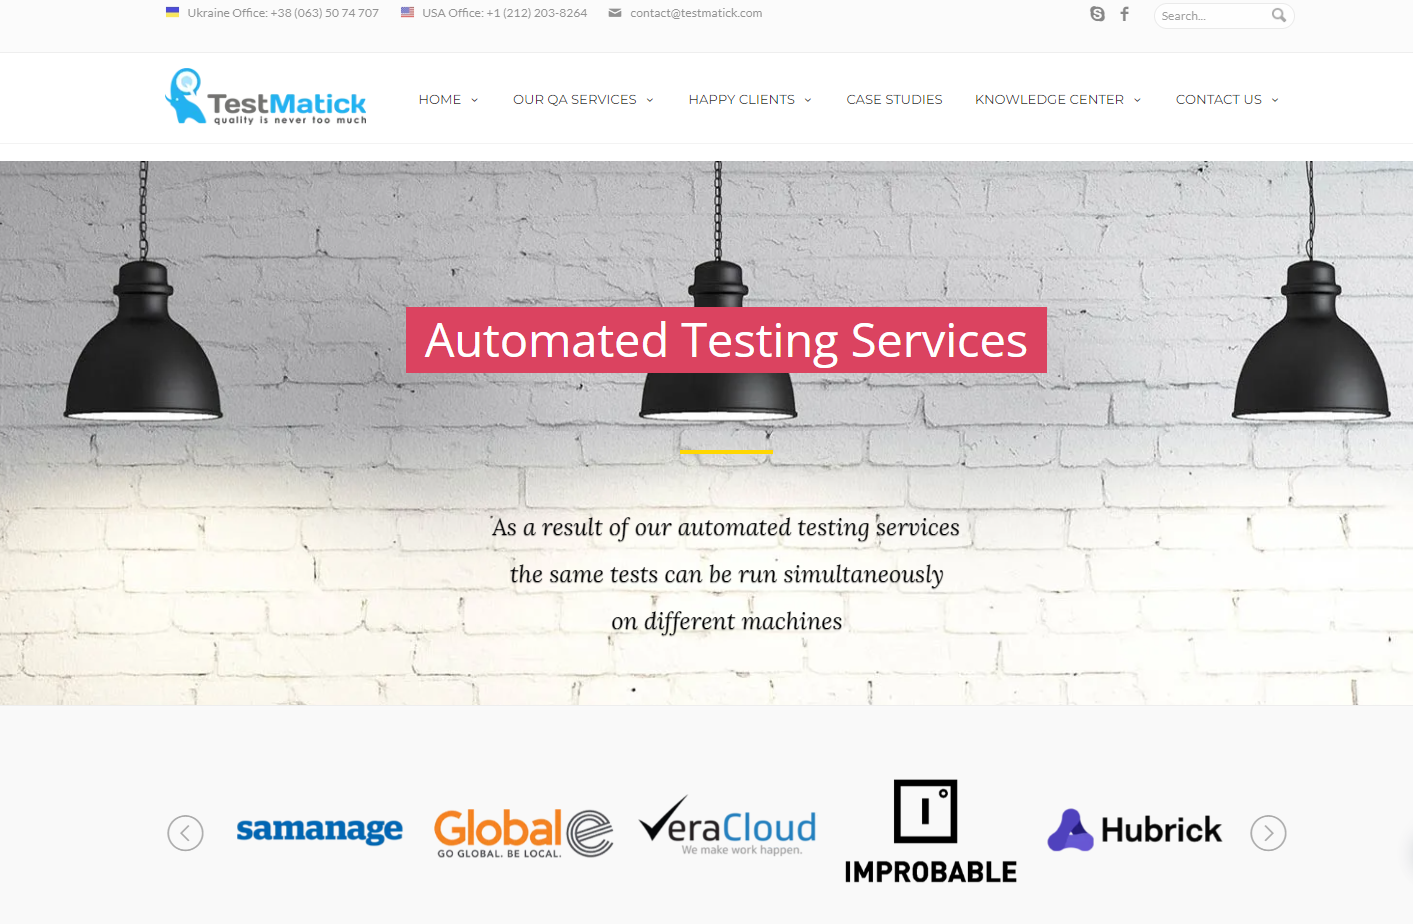 Test automation companies